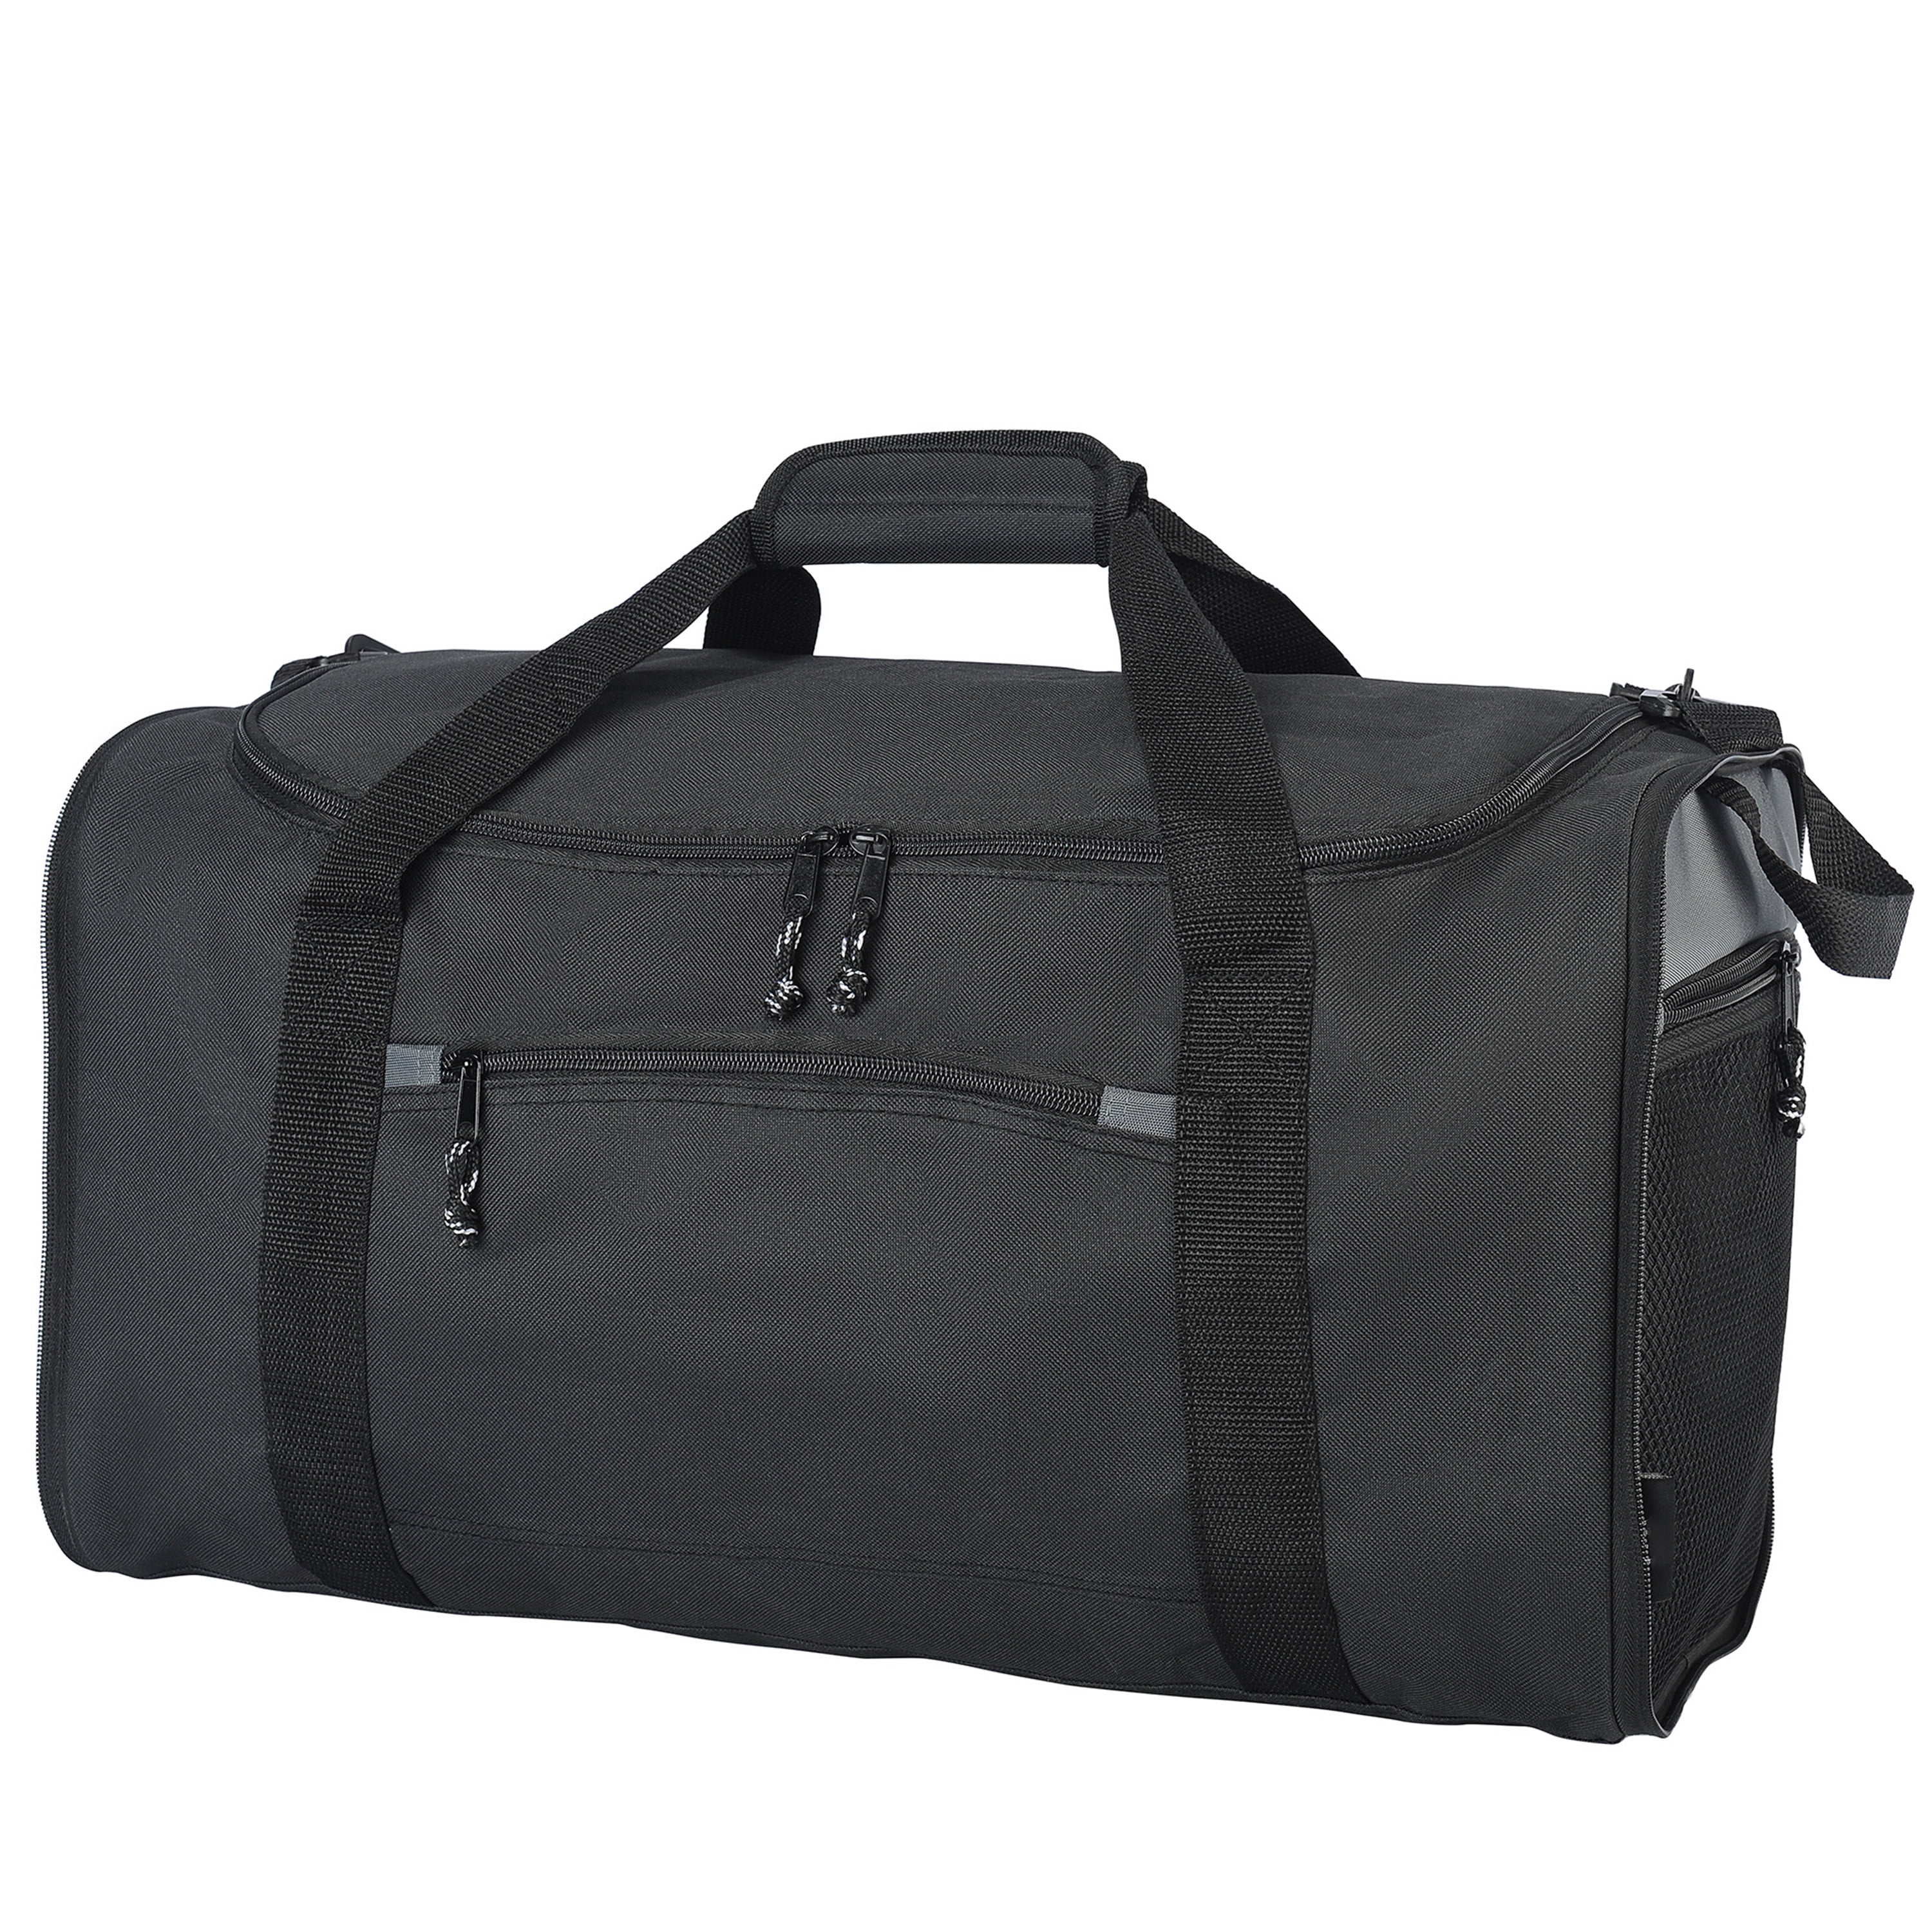 Broad Bay Large GMU Duffel Bag CAMO George Mason University Suitcase Duffle Luggage Gift Idea for Men Man Him! 